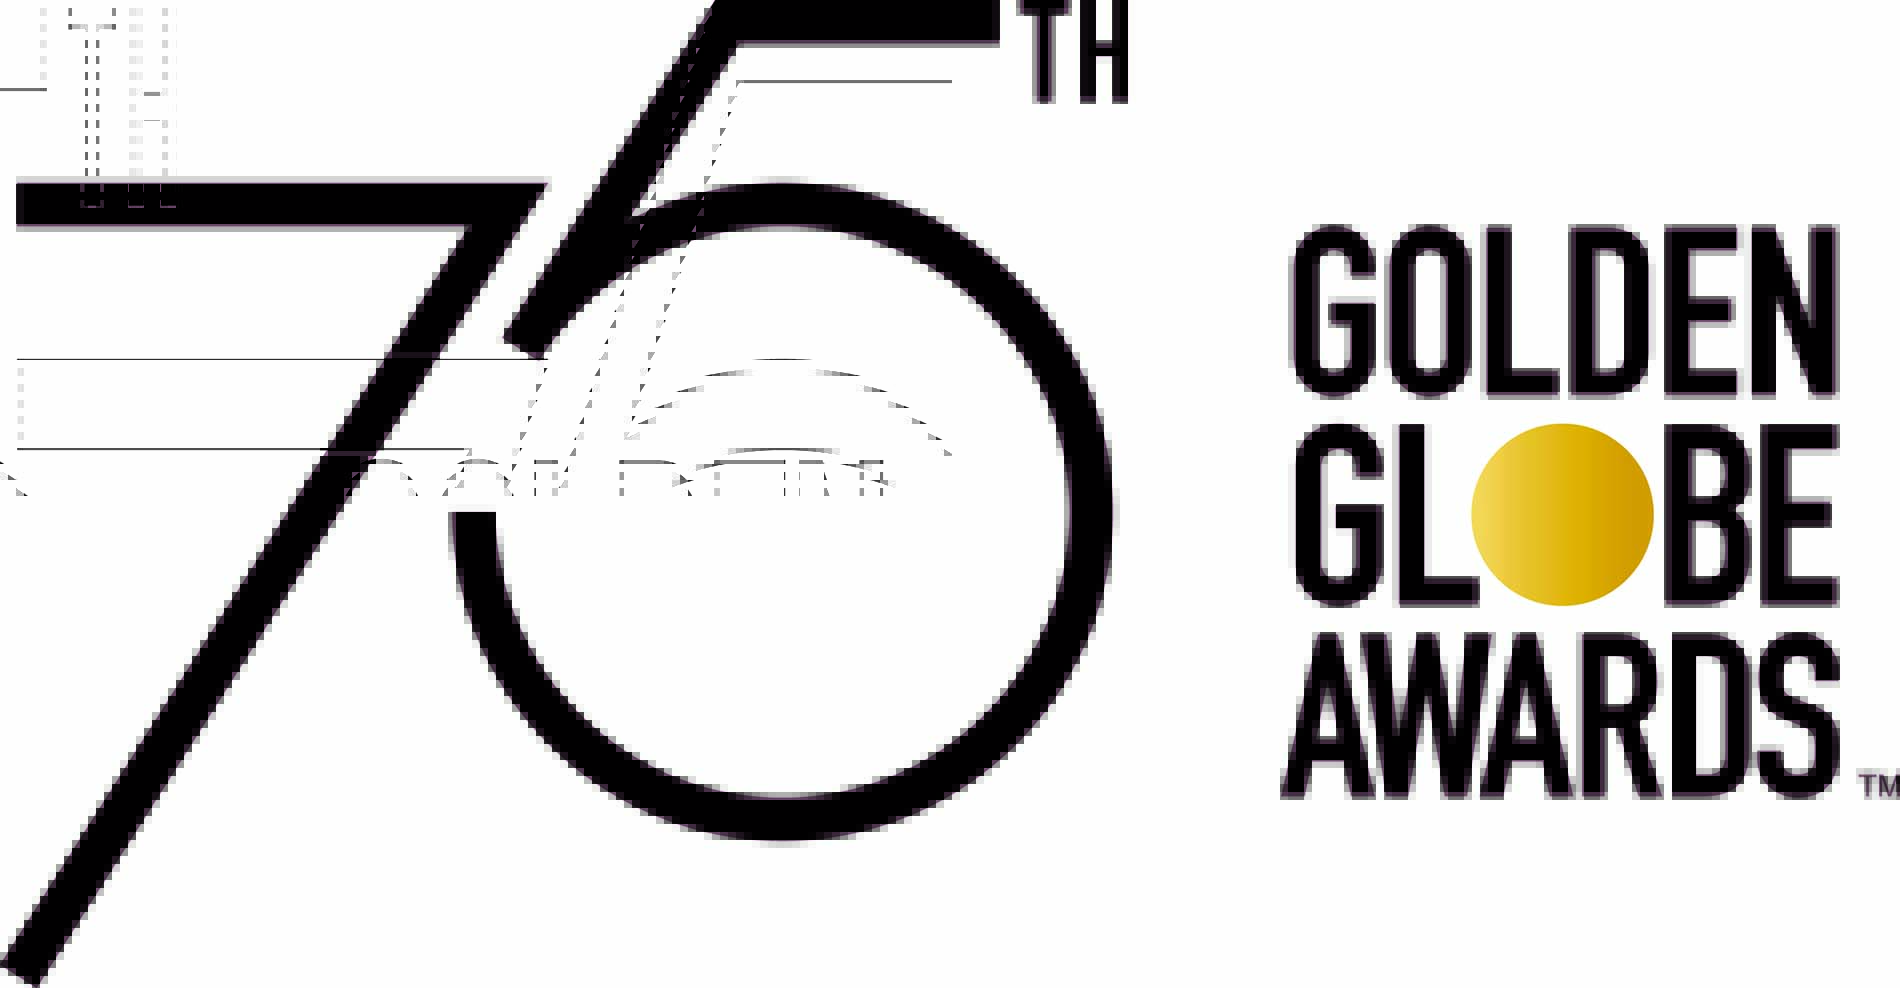 75th Annual Golden Globe Awards logo